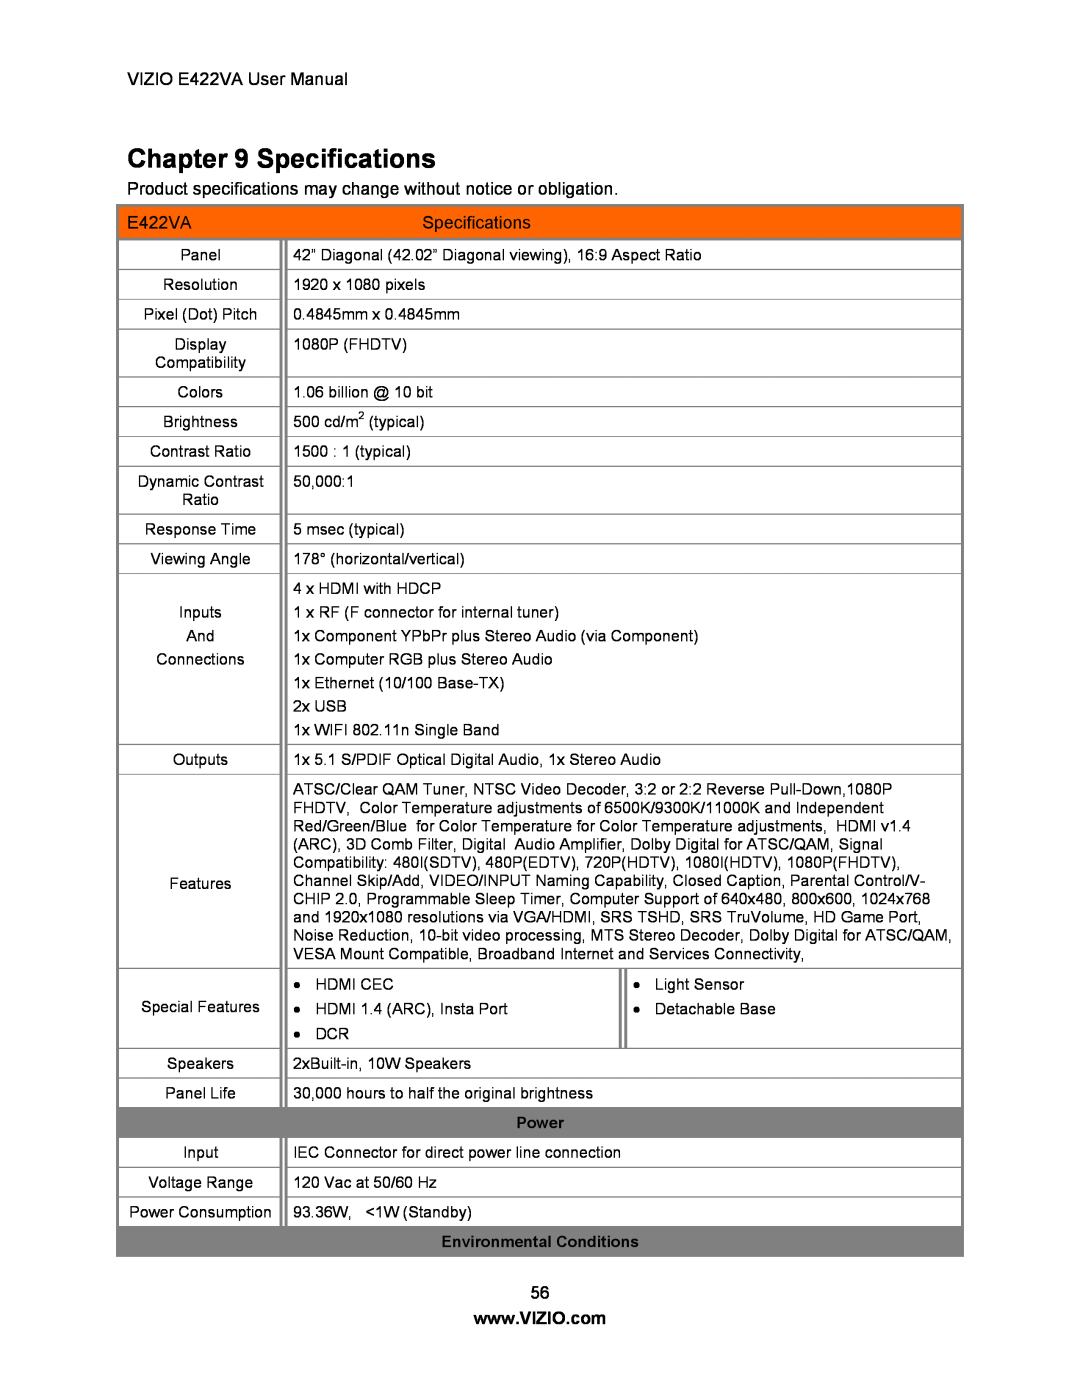 Xerox E422VA user manual Specifications, Power, Environmental Conditions 